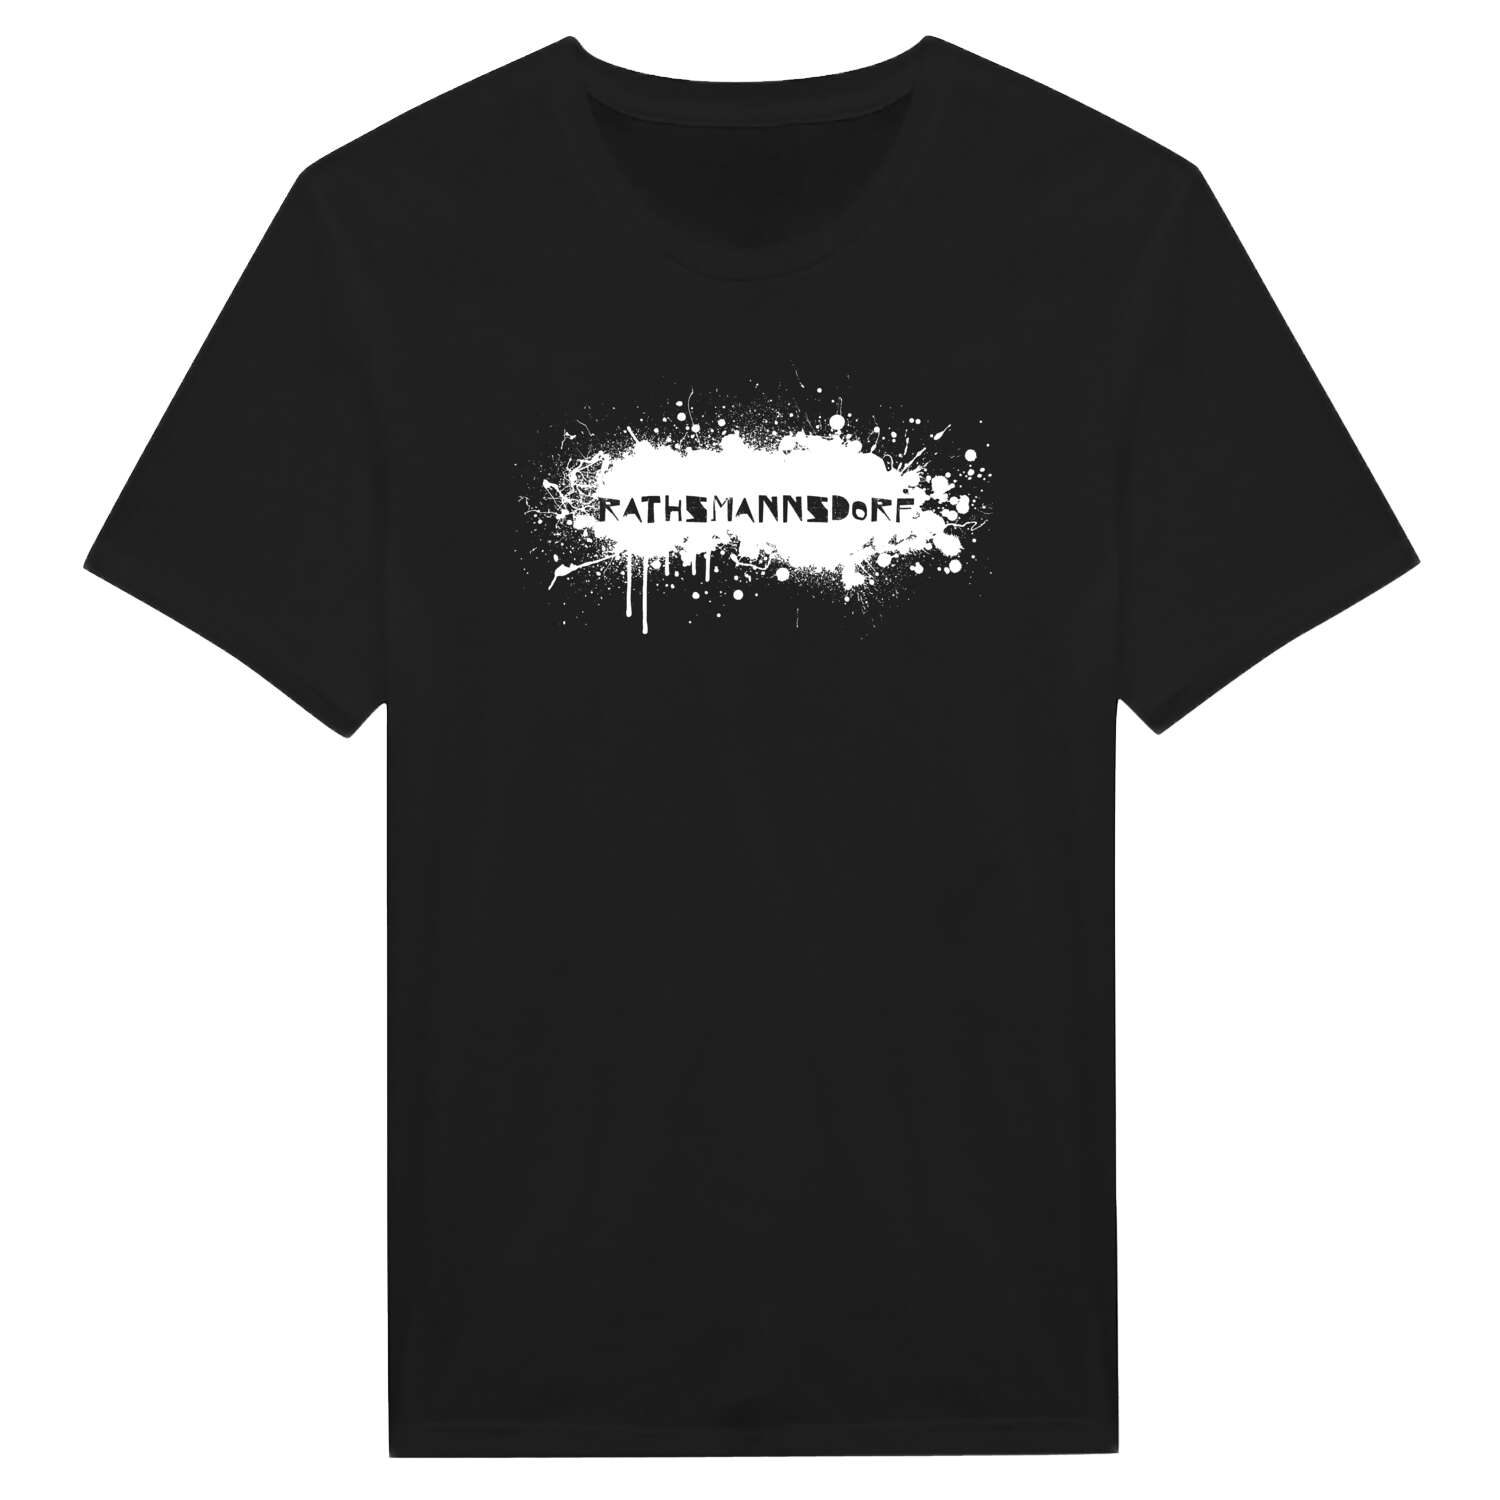 Rathsmannsdorf T-Shirt »Paint Splash Punk«